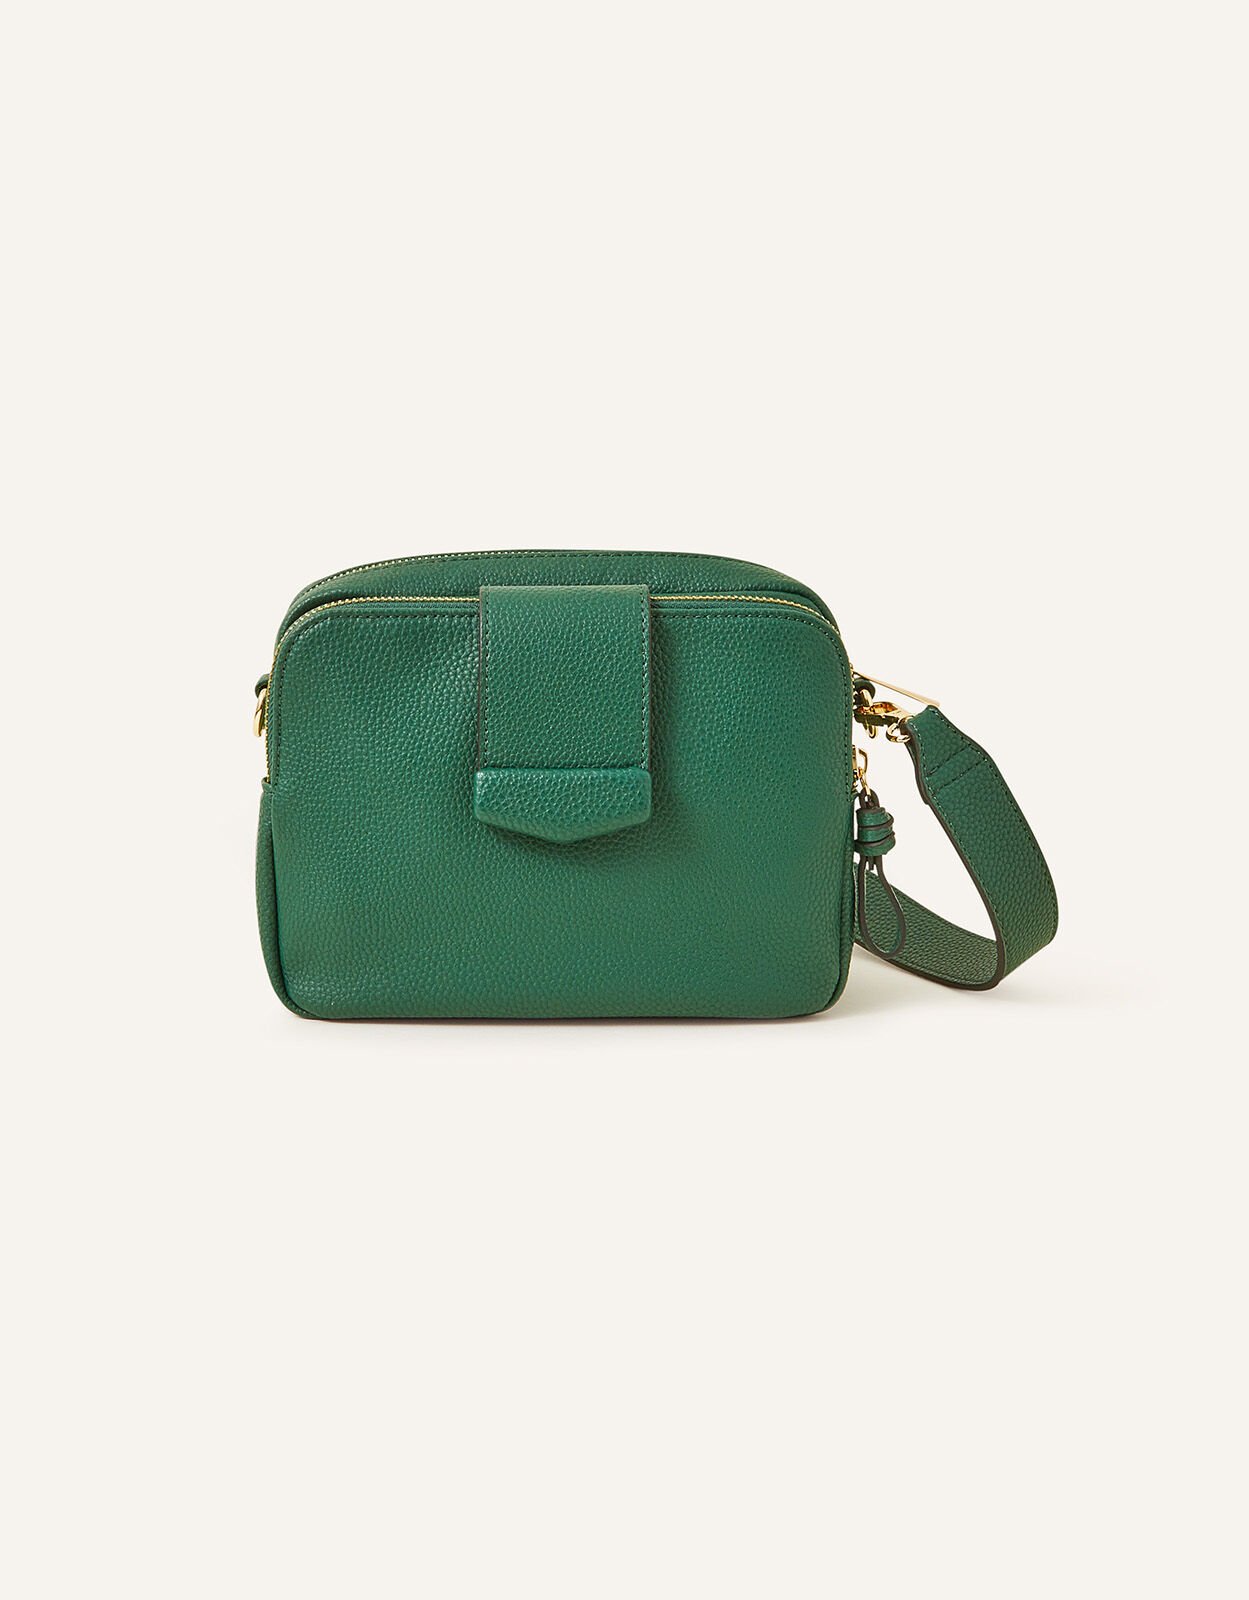 WONTON Leather Bags | TAKE AWAY Collection | BOYY ™